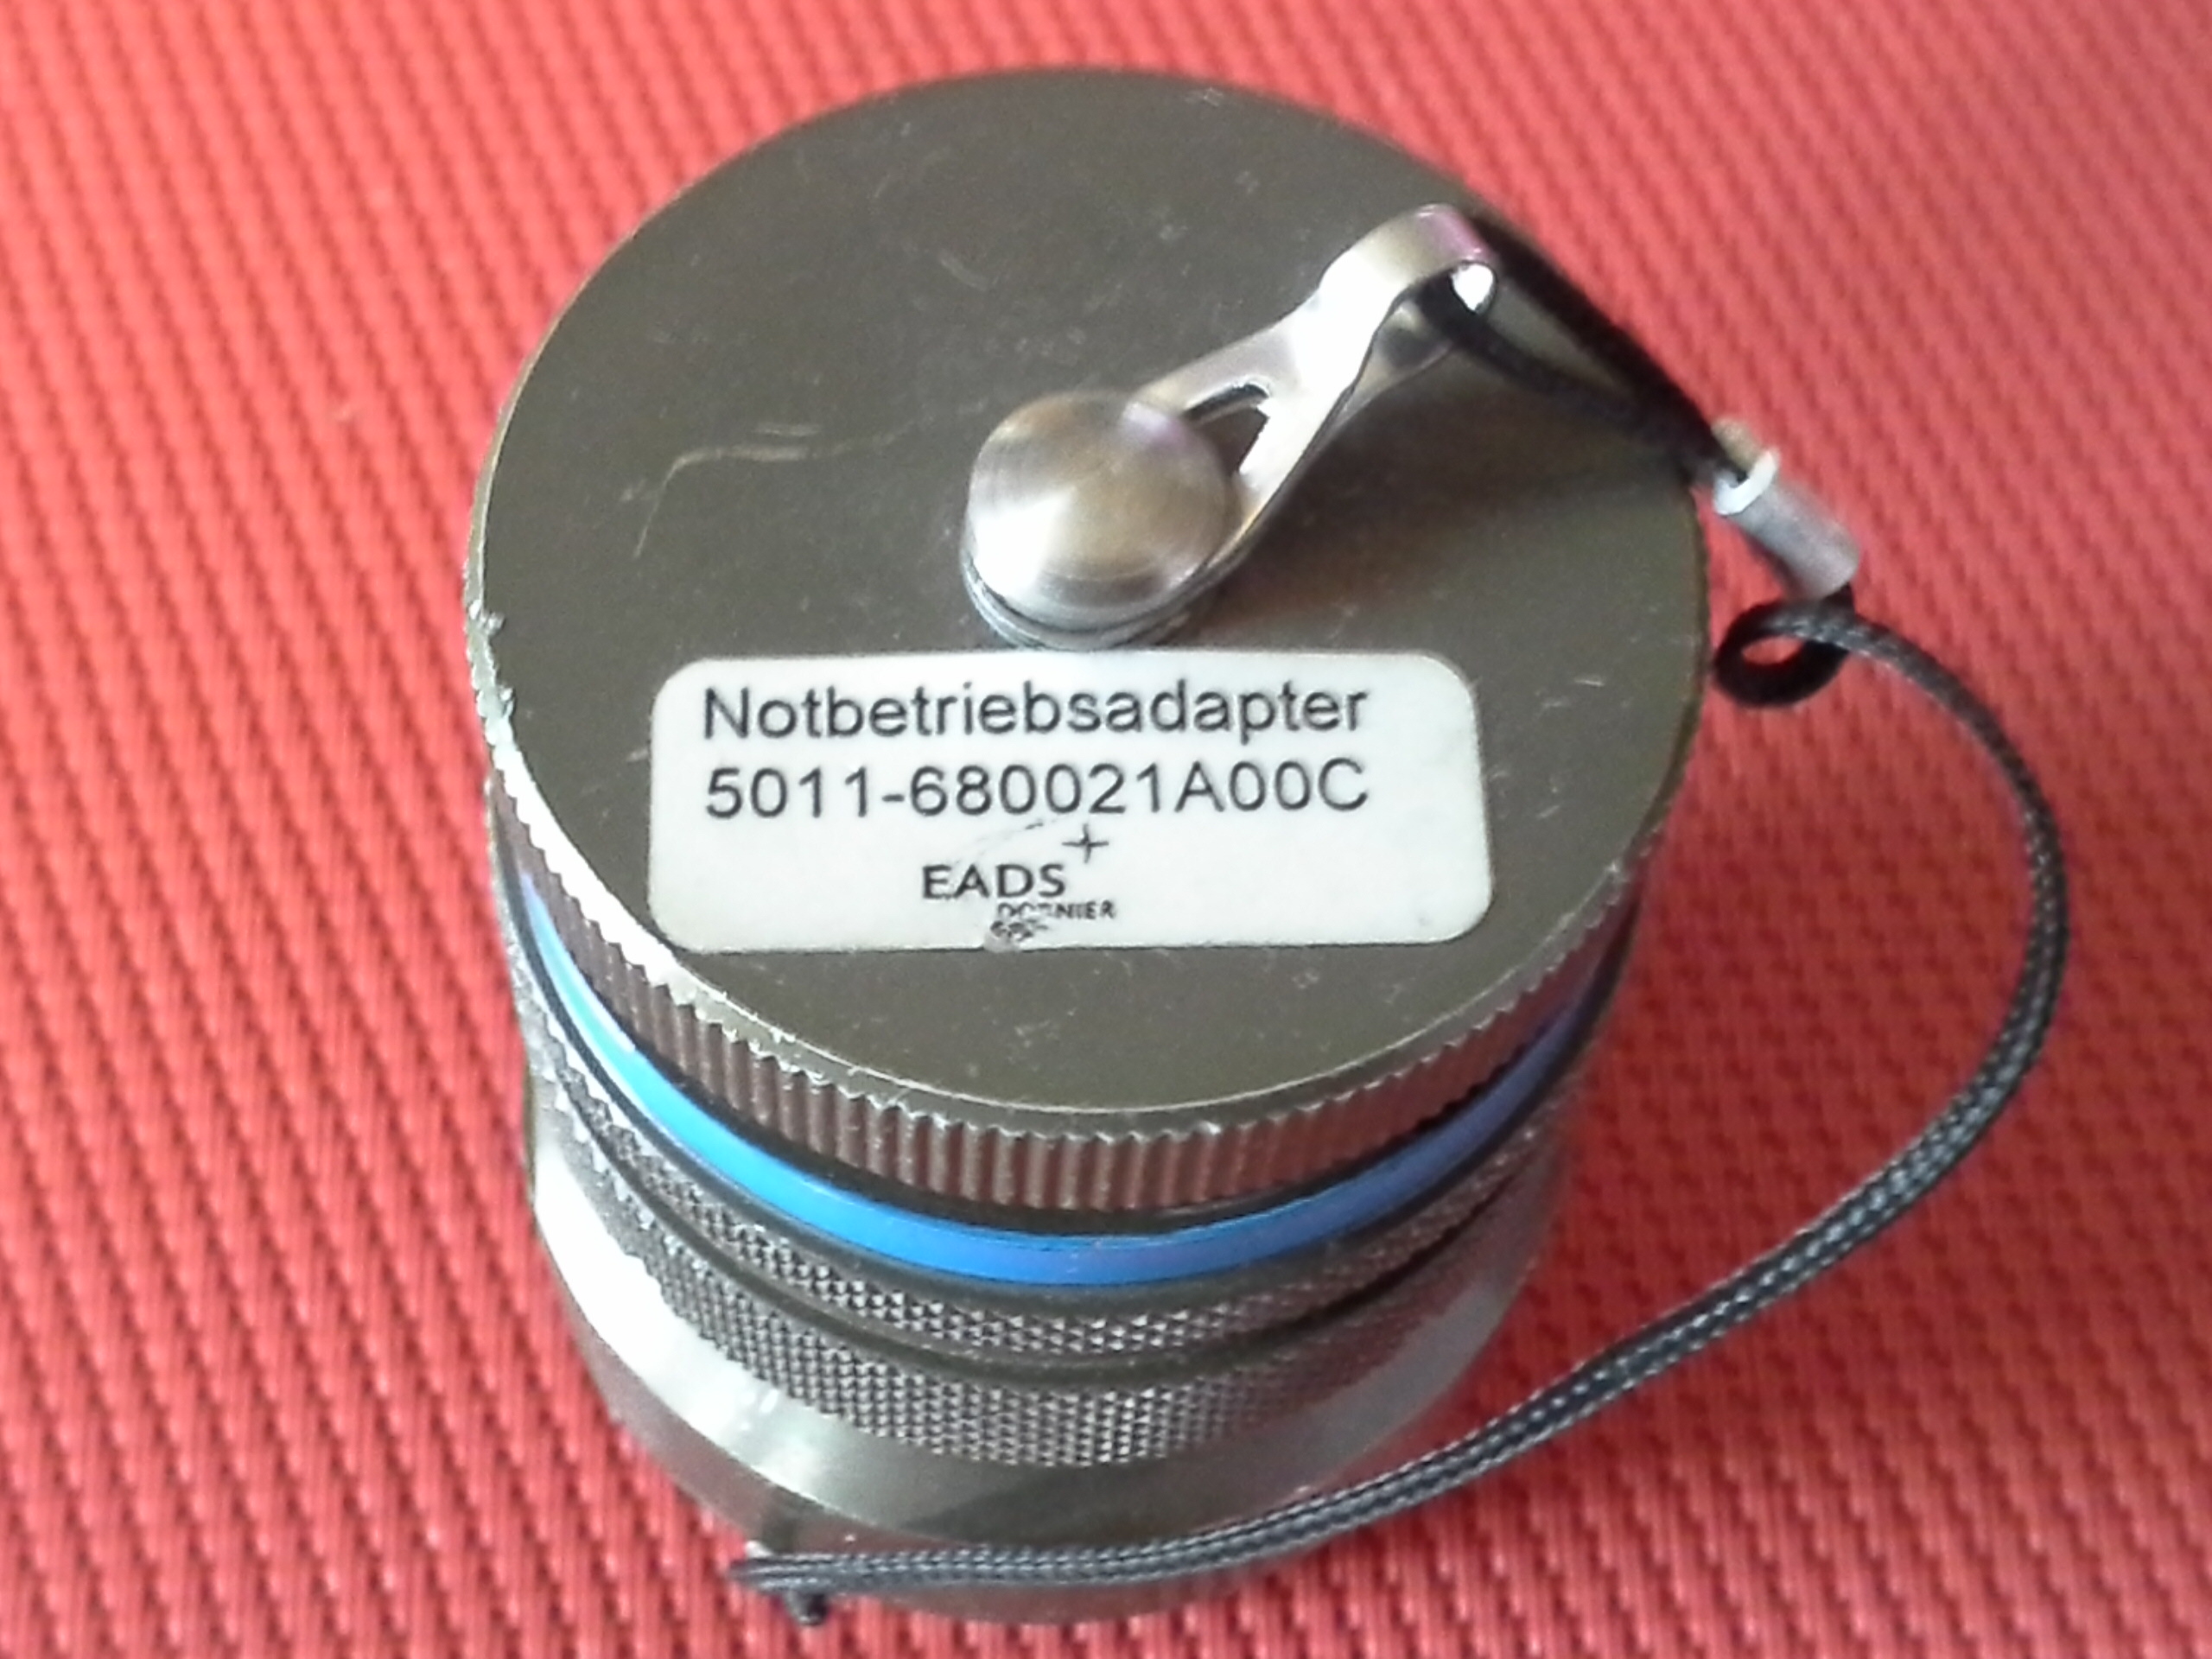 Notbetriebsadapter 5011-680021A00C